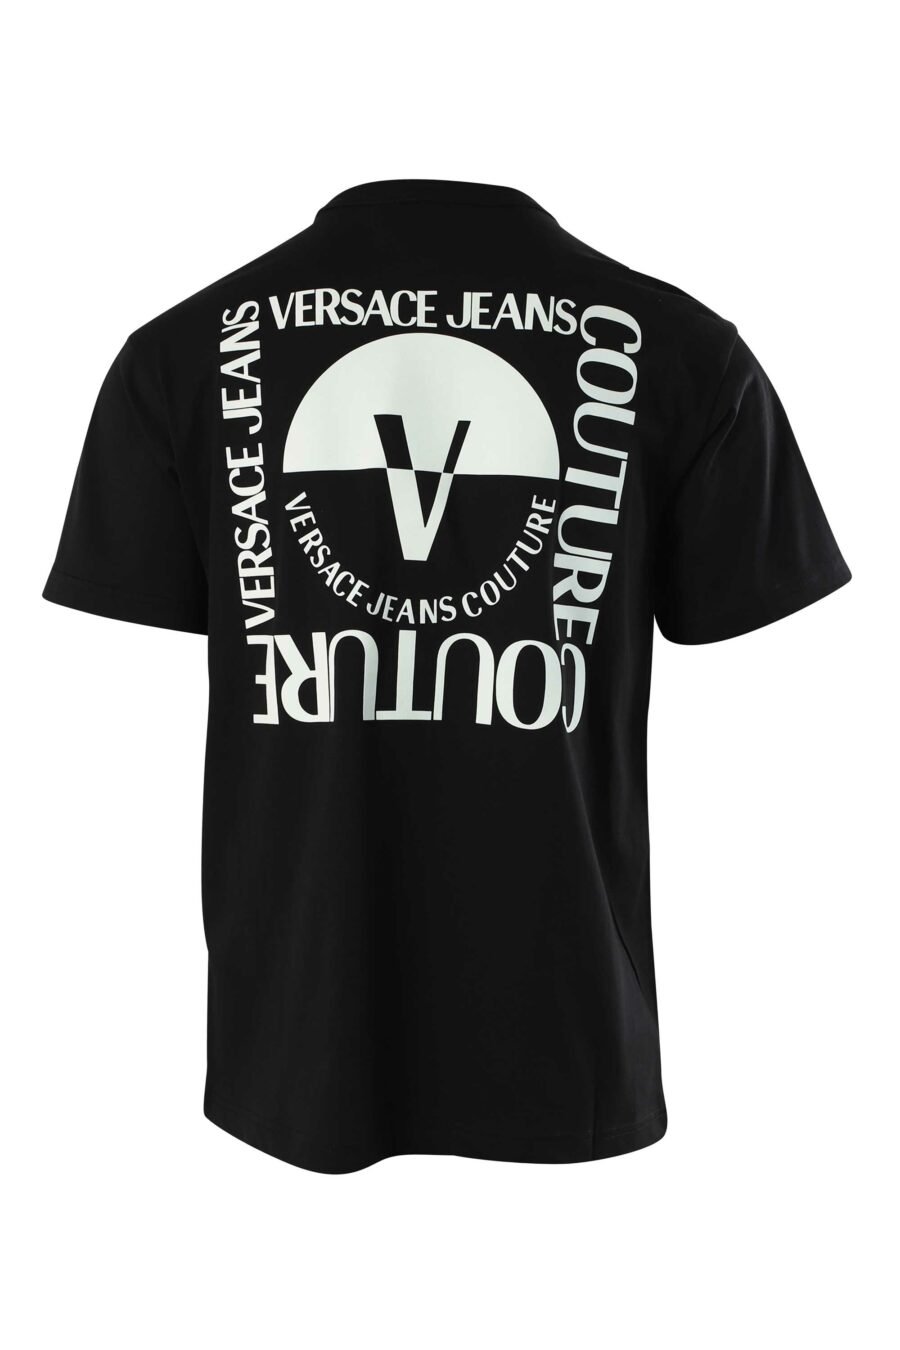 T-shirt preta com minilogo preto e branco - 8052019325522 2